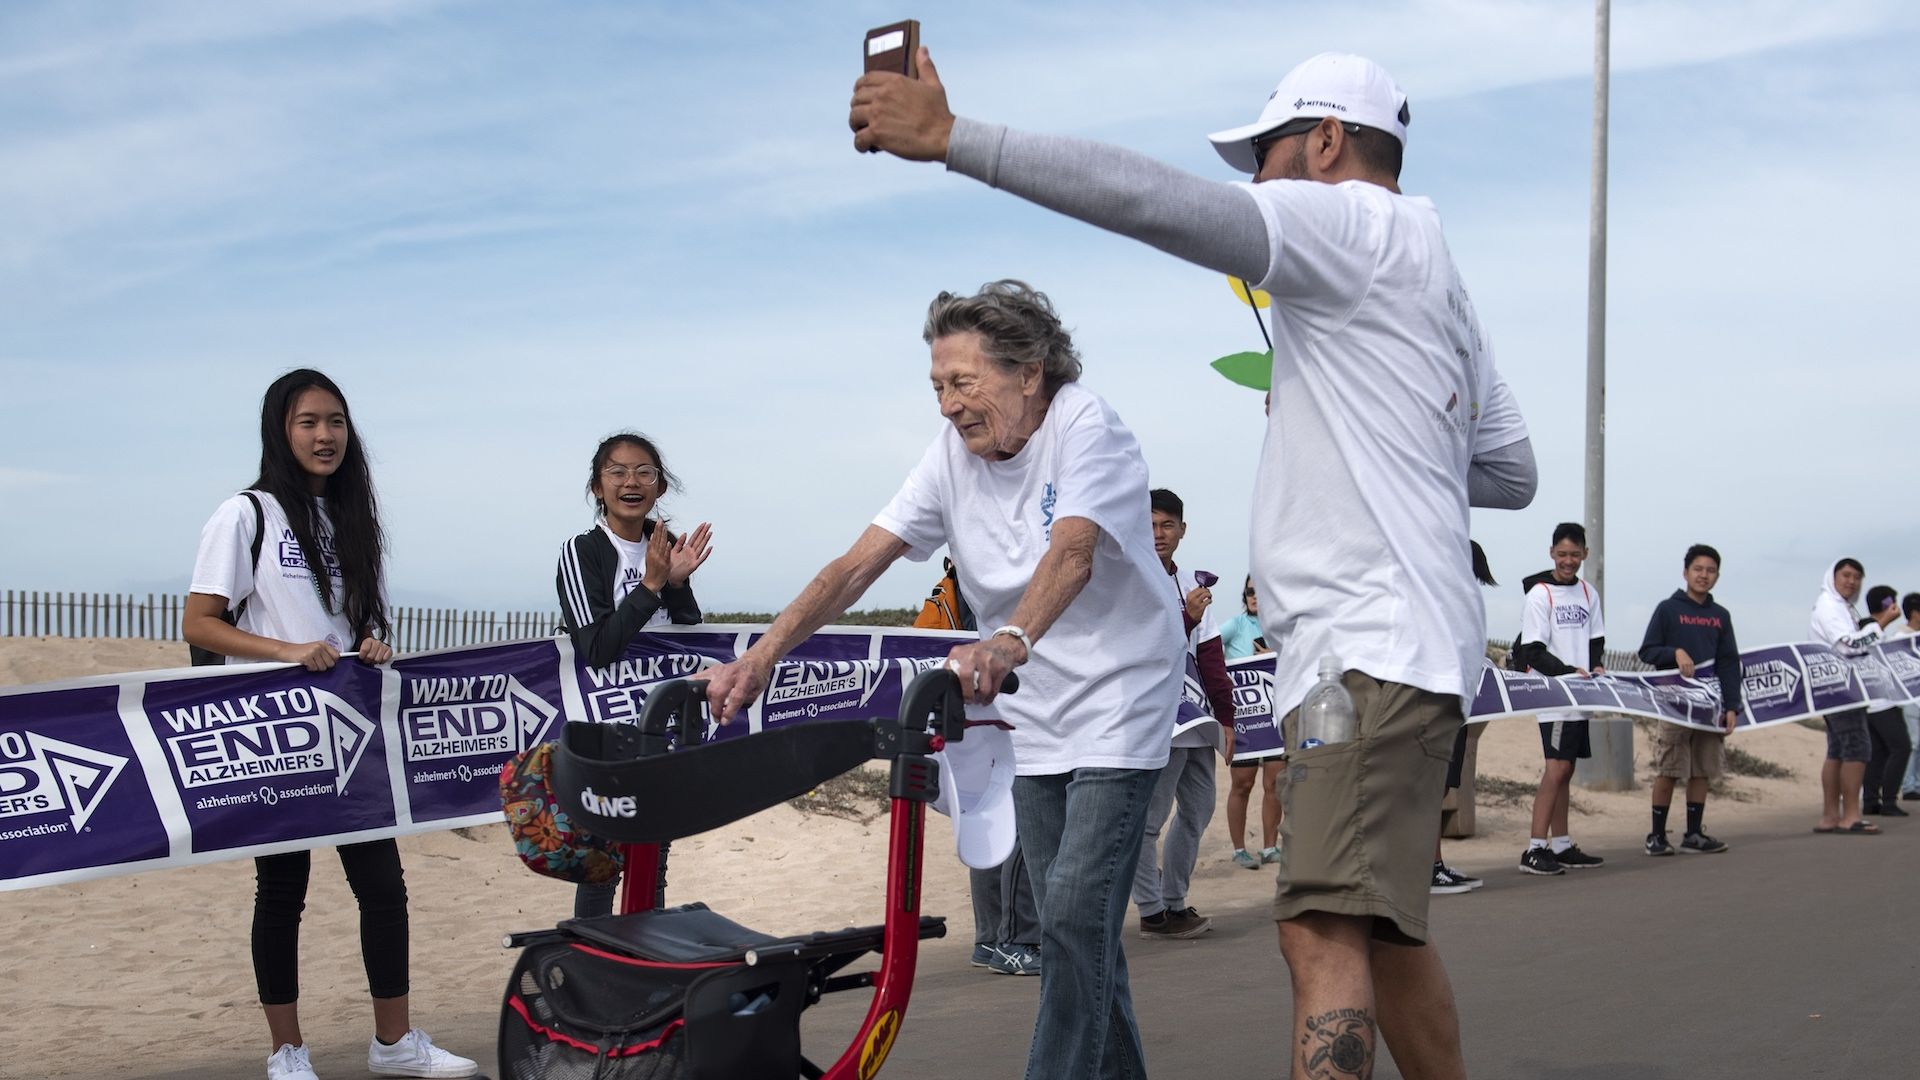 HUNTINGTON BEACH, CA - OCTOBER 06: A man records the 2-mile Walk to End Alzheimer's finish in Huntington Beach, Calif.